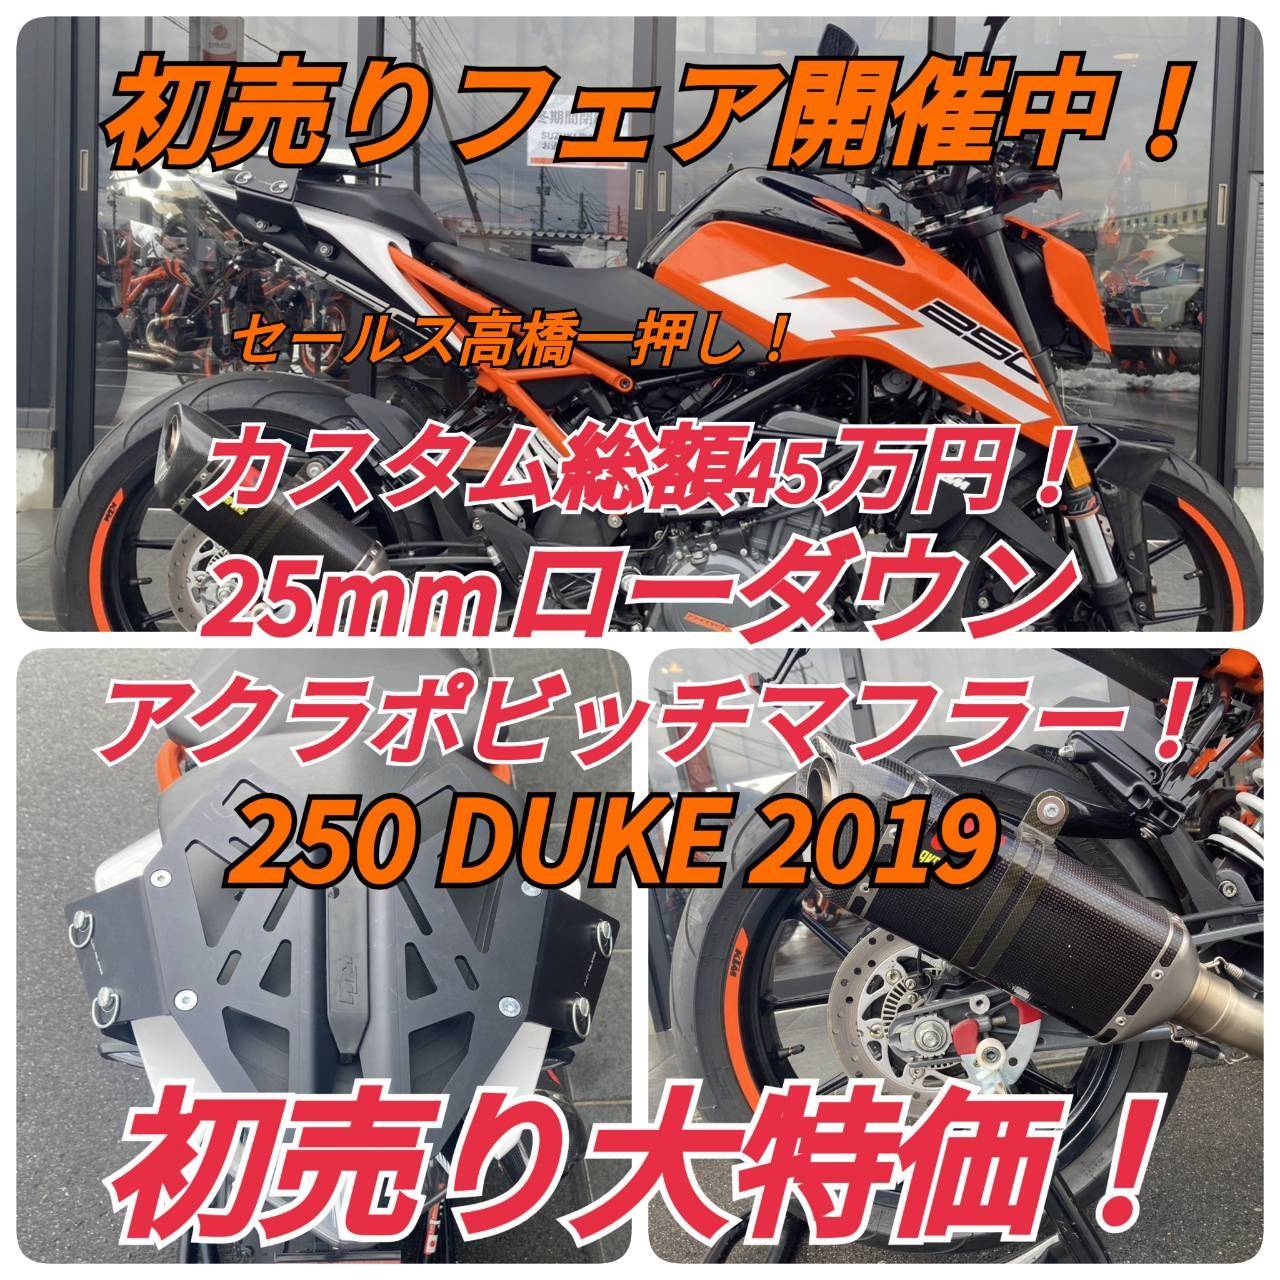 KTM 250 DUKE 2019 カスタム総額45万円以上 中古車入荷 KTM山形